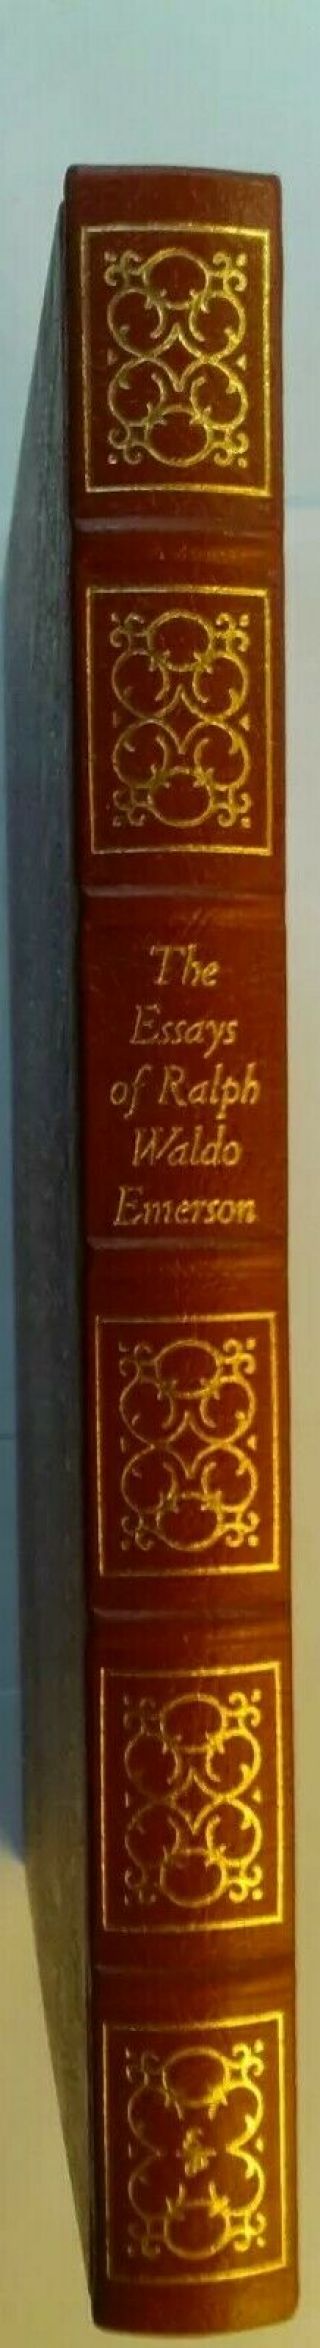 The Essays Of Ralph Waldo Emerson,  Fine Full Leather,  Easton Press (bkn155)